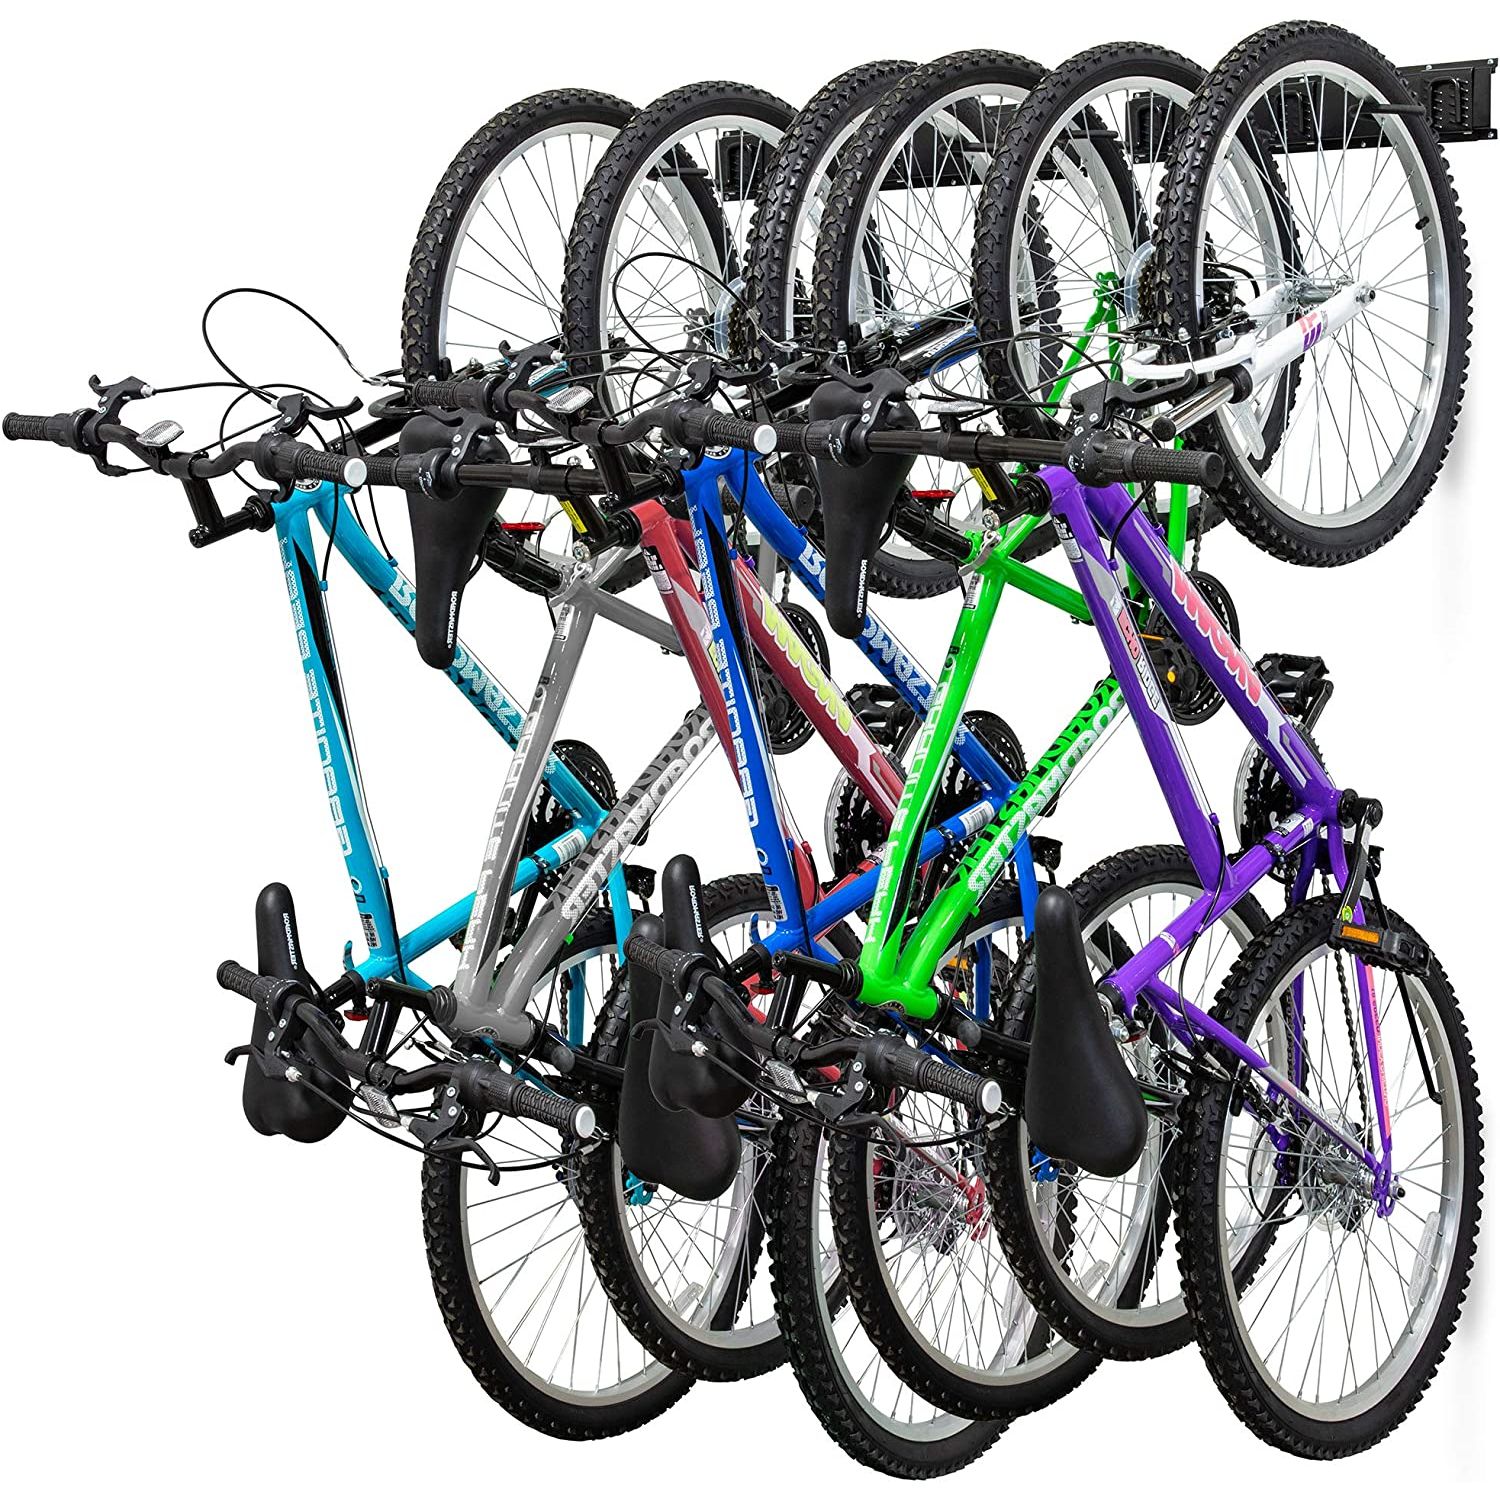 RAXGO Garage Bike Rack, Wall Mount Bicycle Storage Hanger with 6 Adjustable  Hooks RAXWMBR - The Home Depot